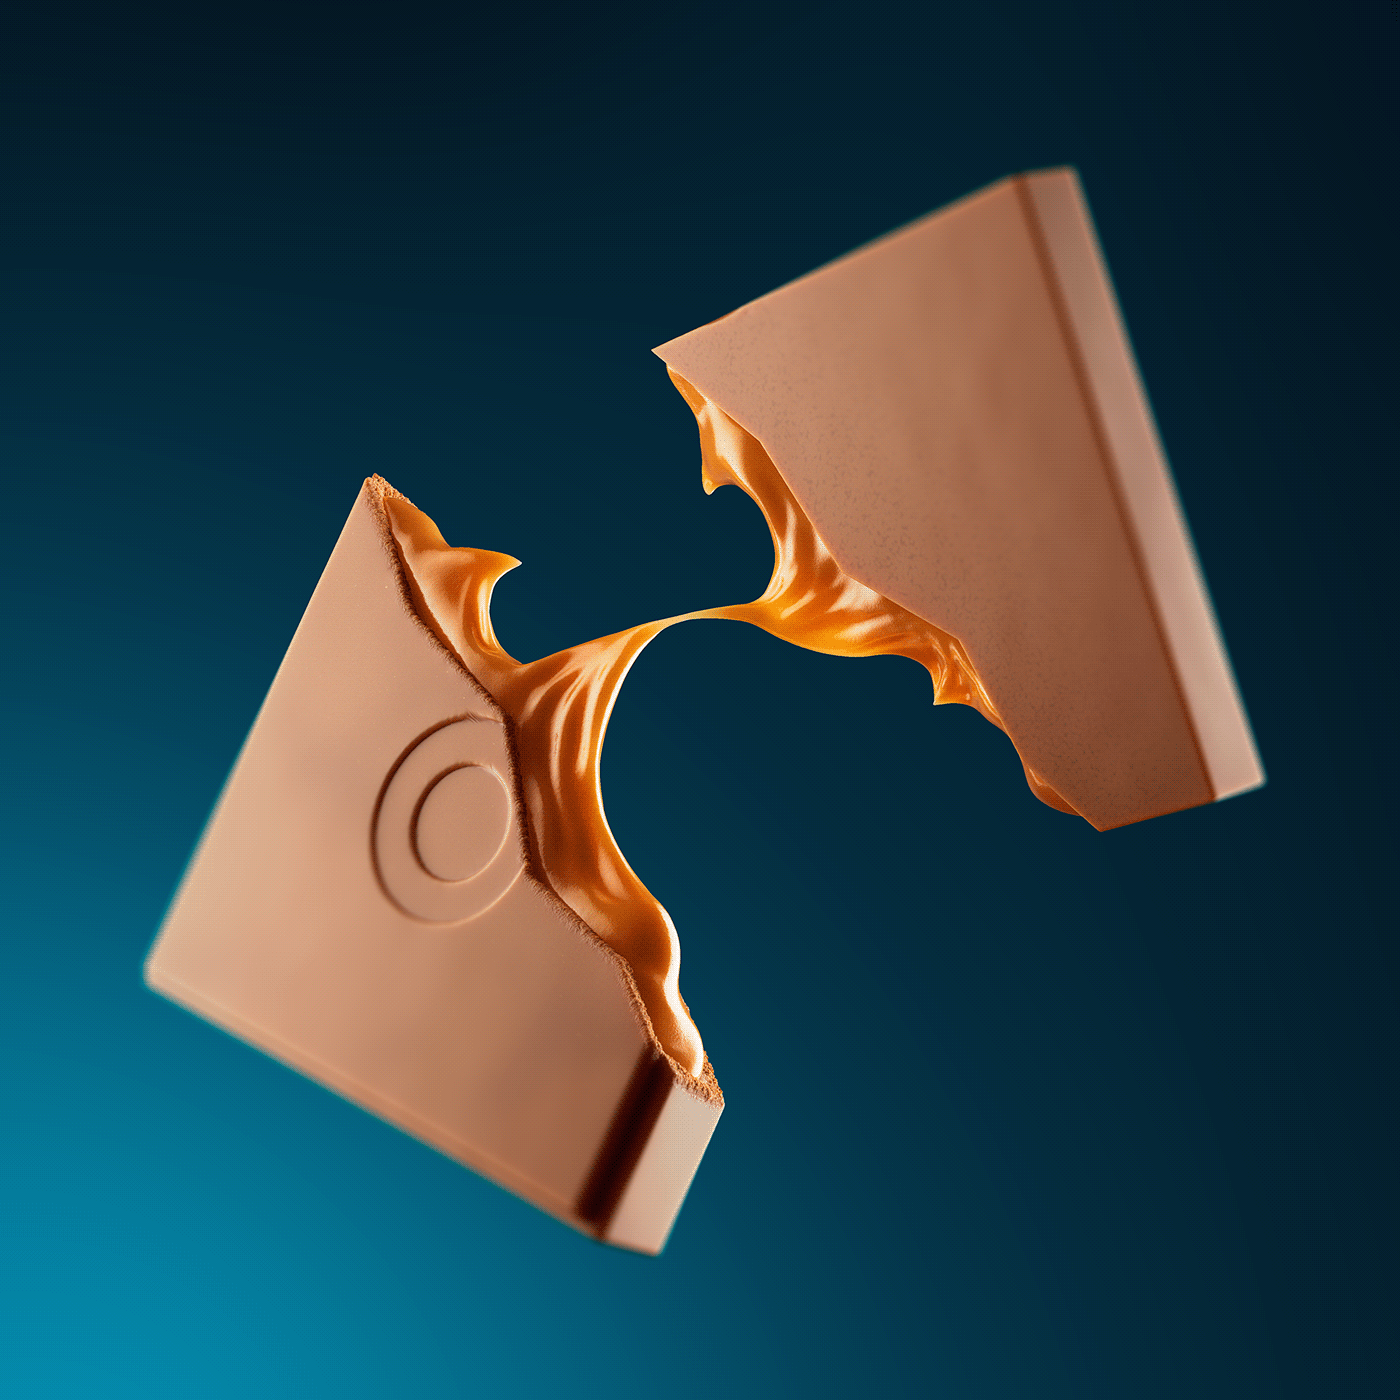 3D CHOCOLATE chocolate bar chocolate 3d food 3D packaging felipe pavani 3d chocolate bars cgi chocolate felipe pavani